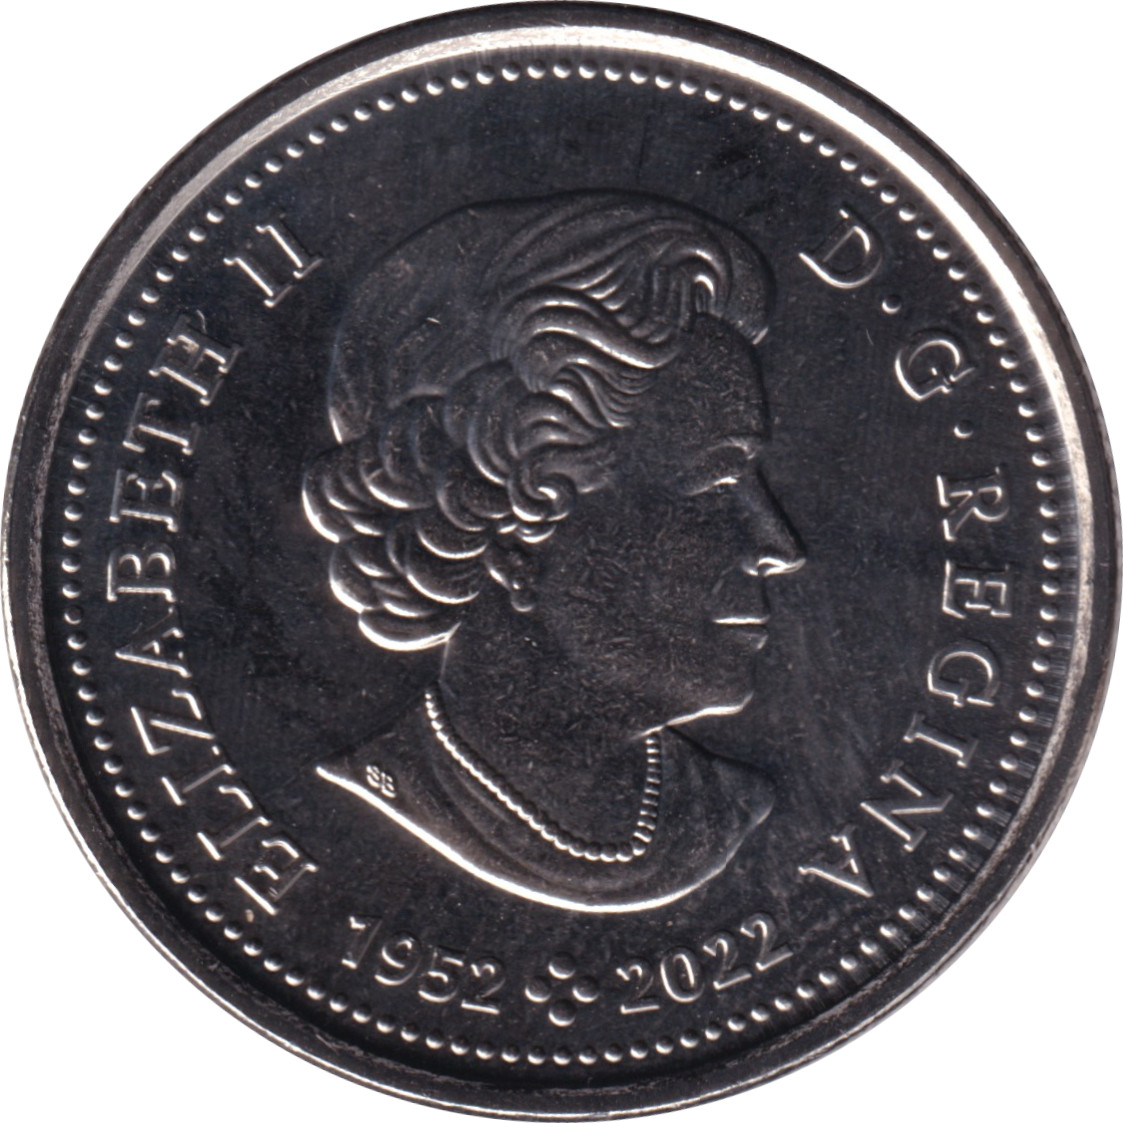 25 cents - Elizabeth II - Hommage